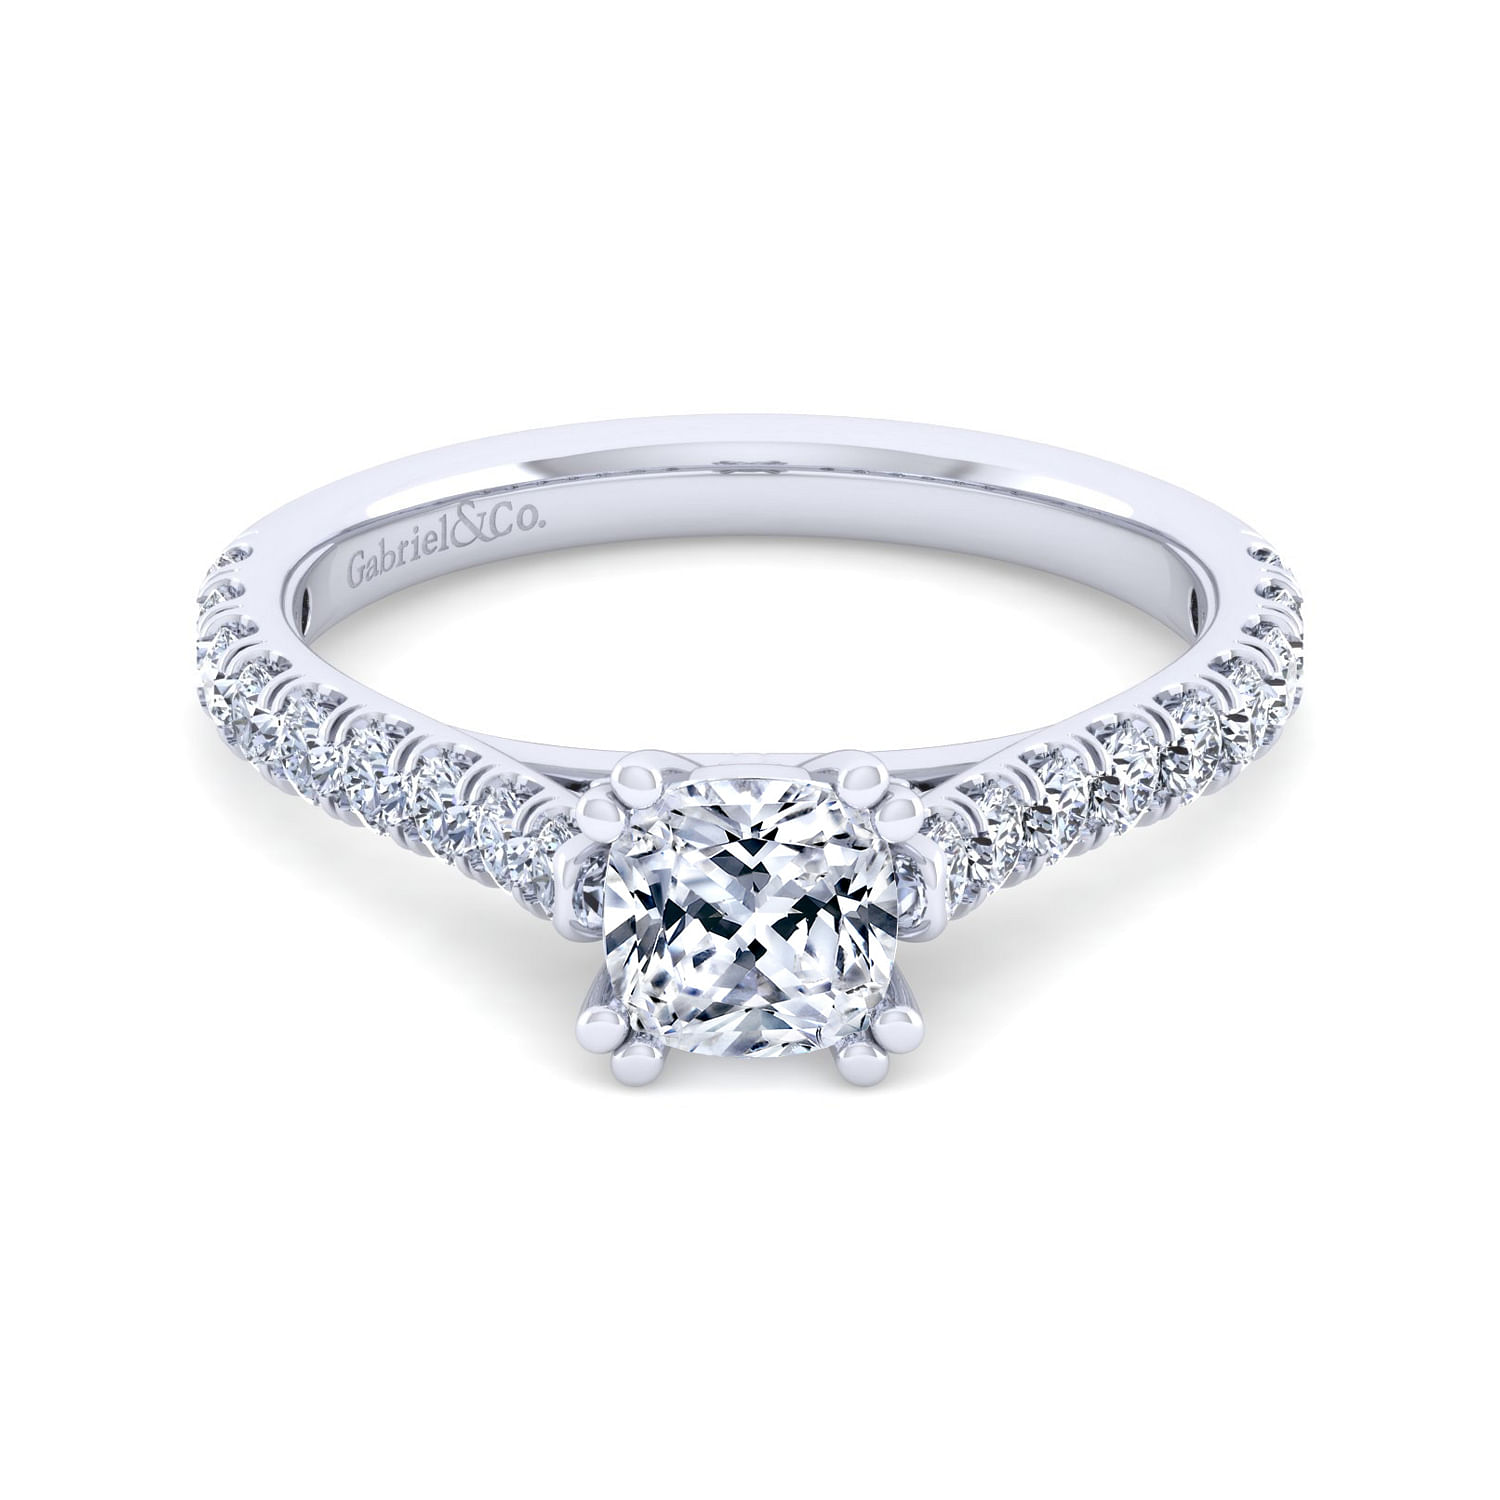 Erica - 14K White Gold Cushion Cut Diamond Engagement Ring